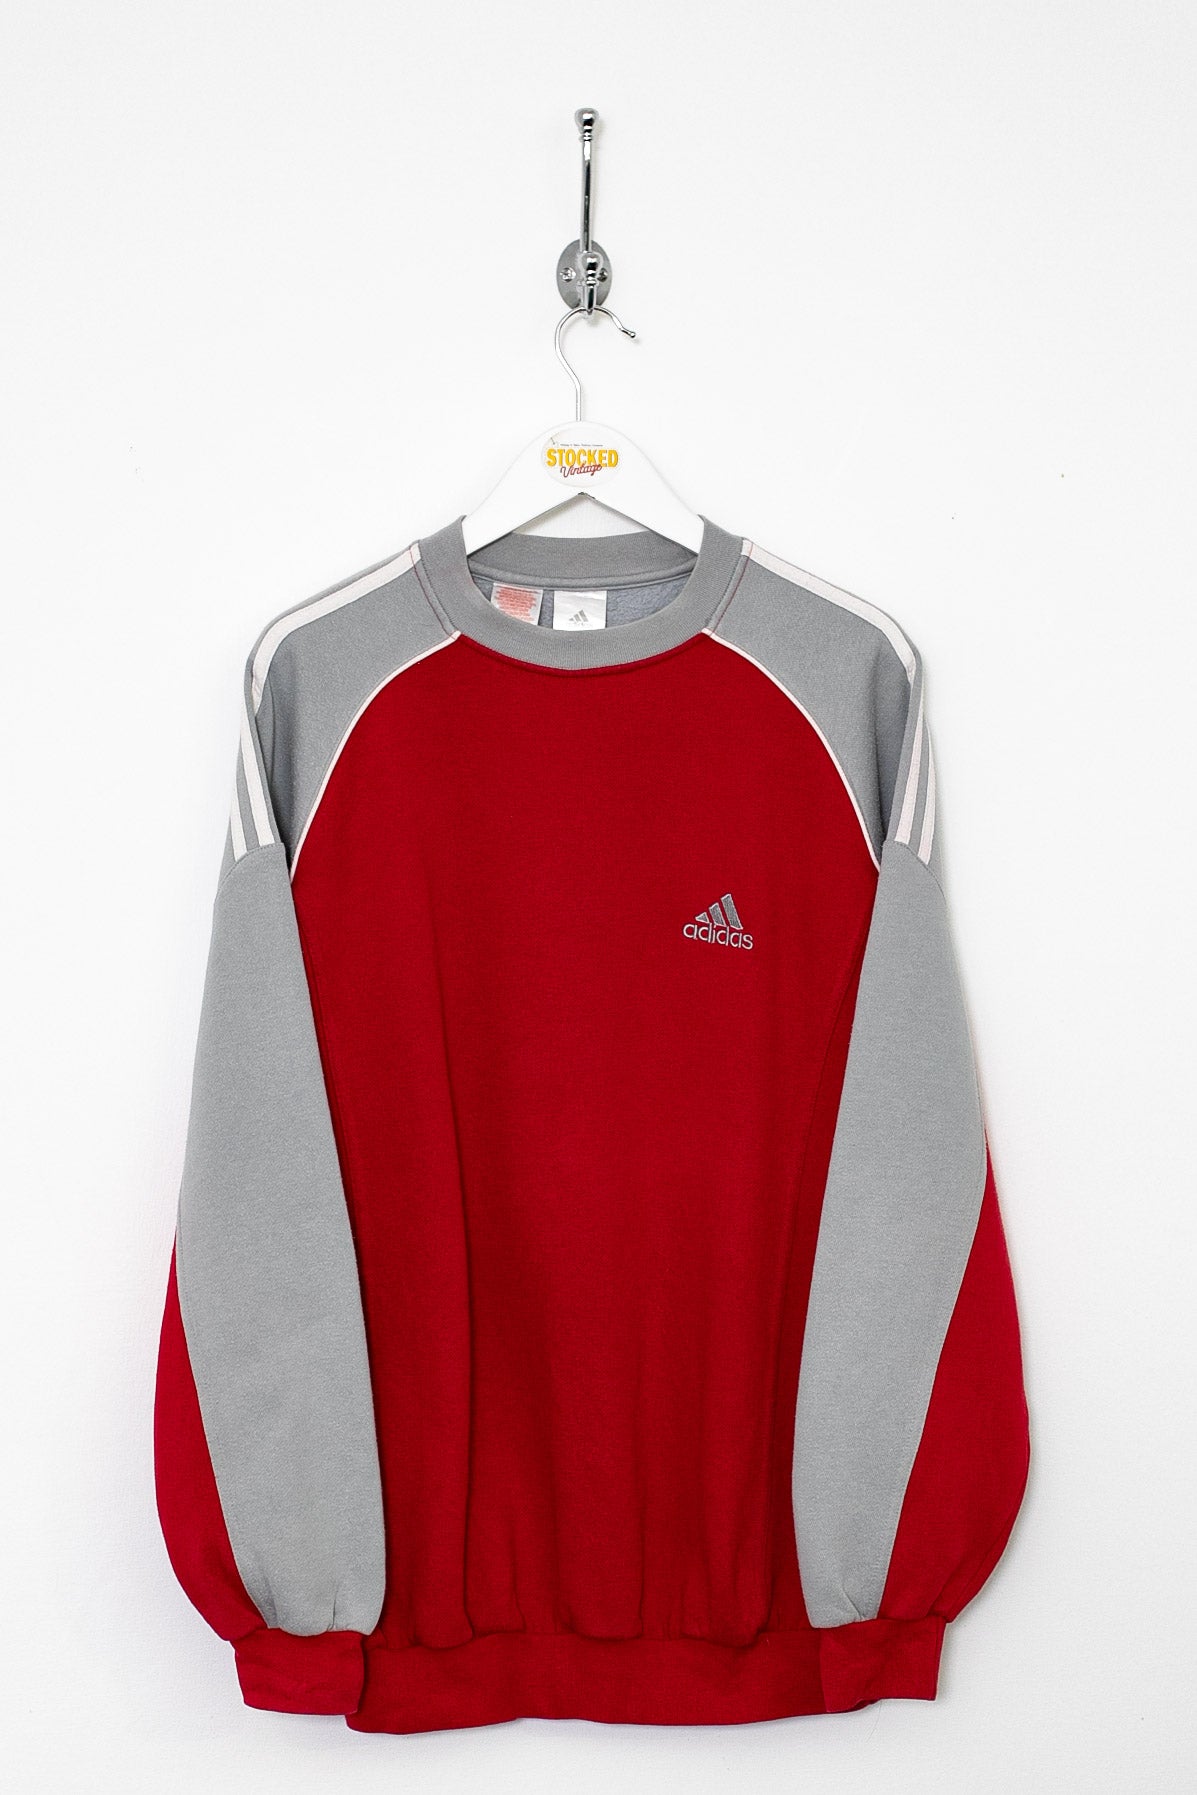 00s Adidas Sweatshirt (S)